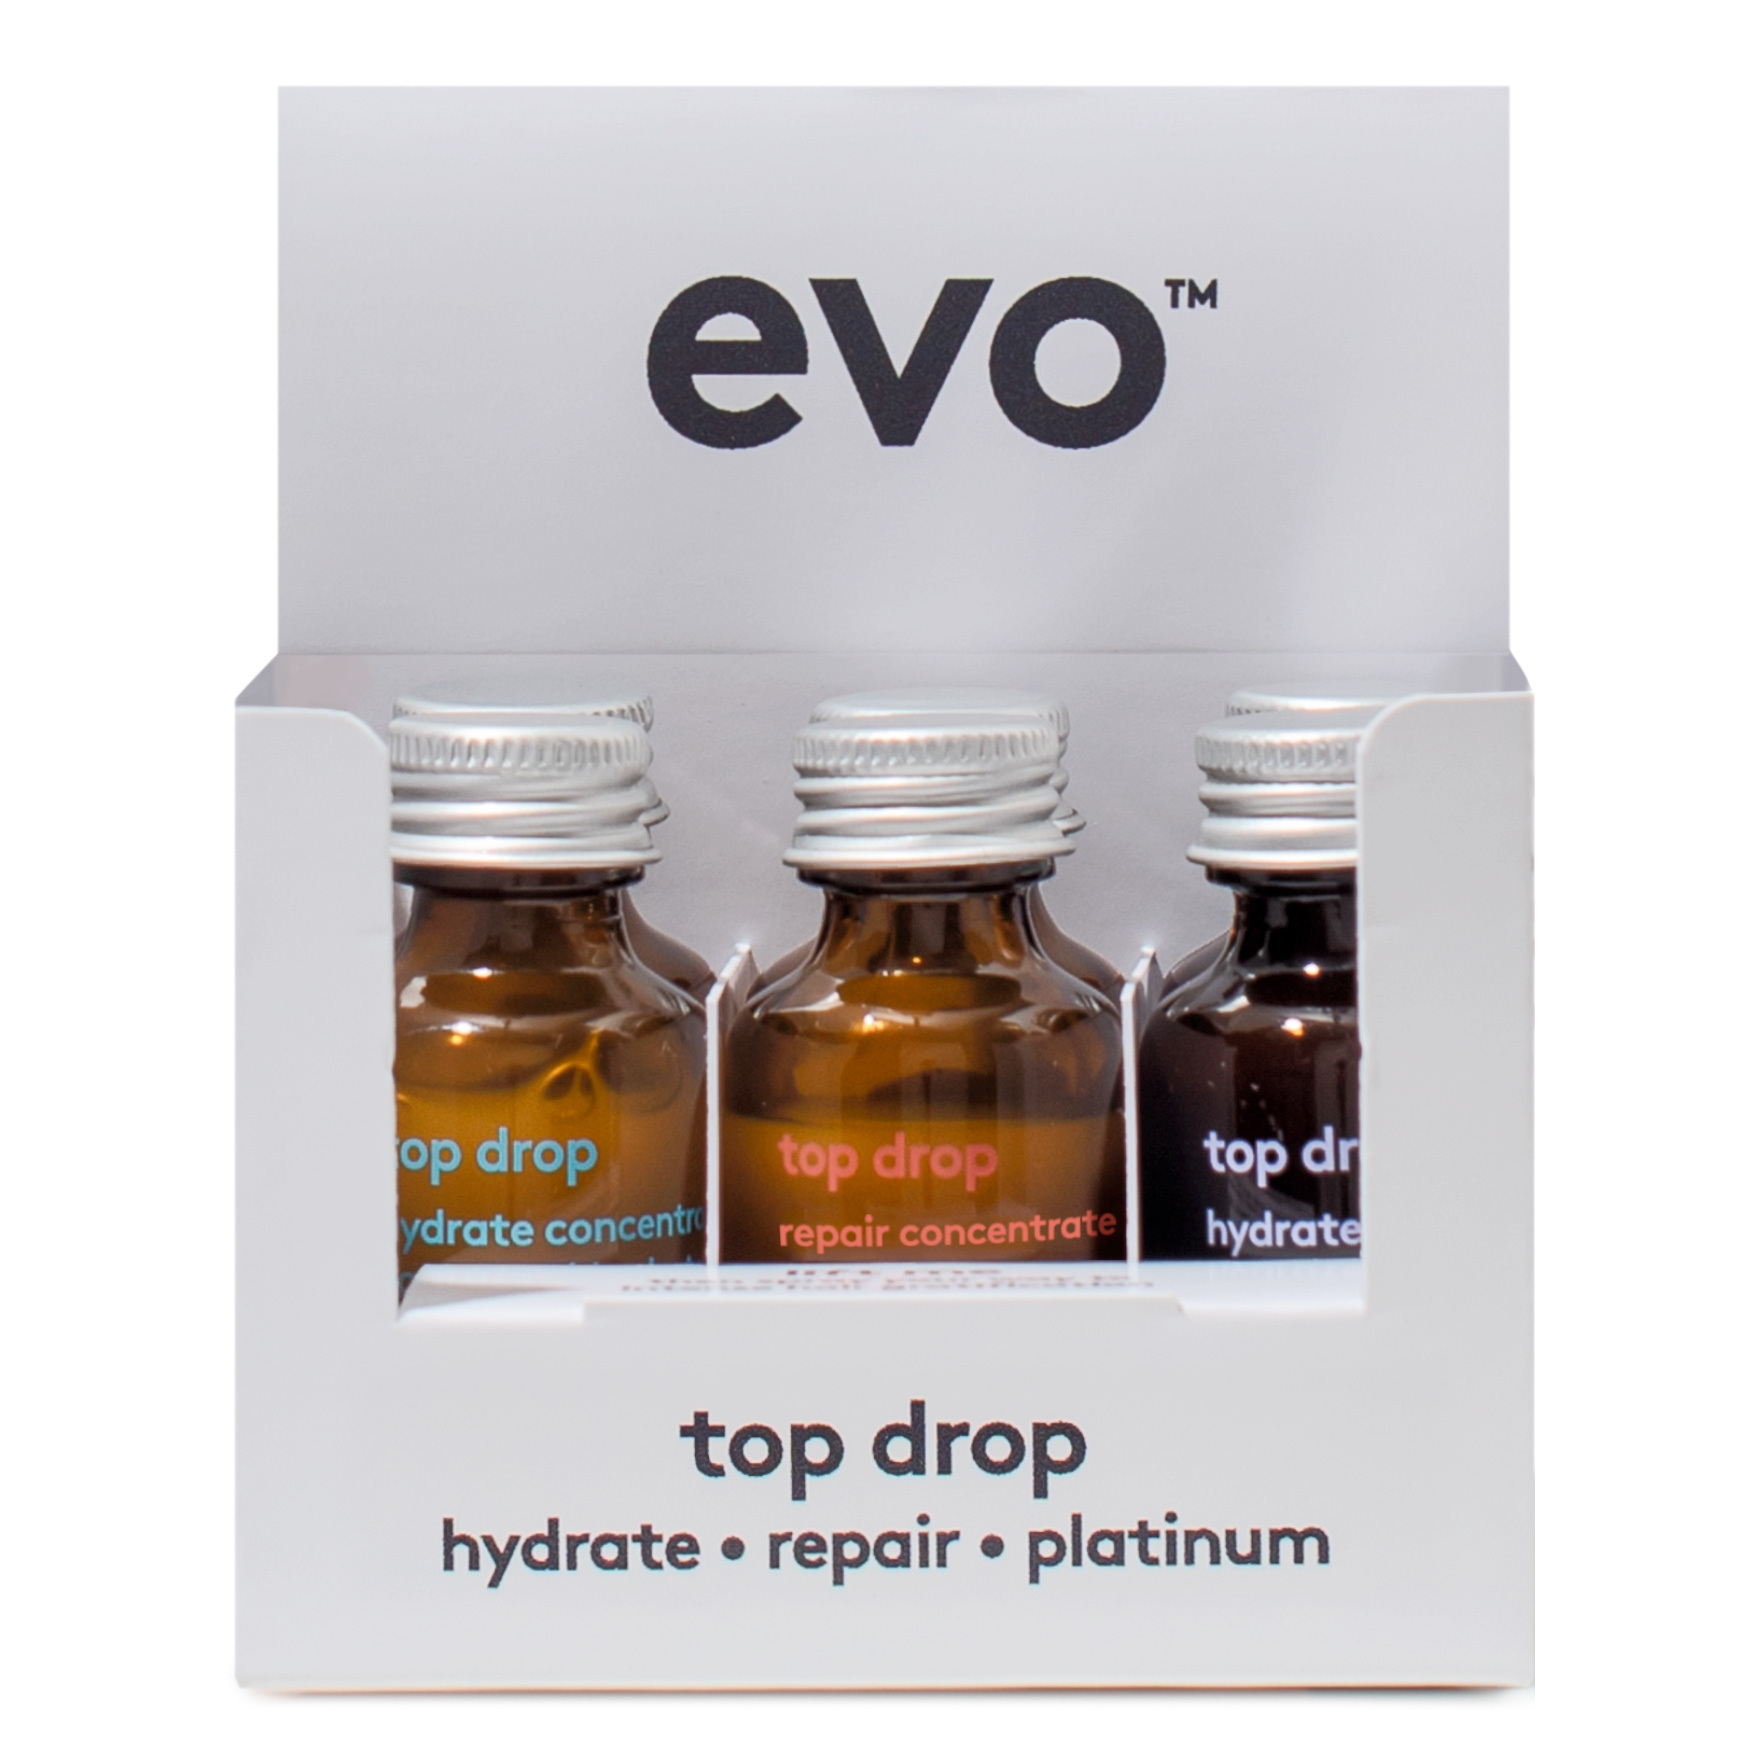 evo top drop taster concentrate - 6pk 15ml Vials